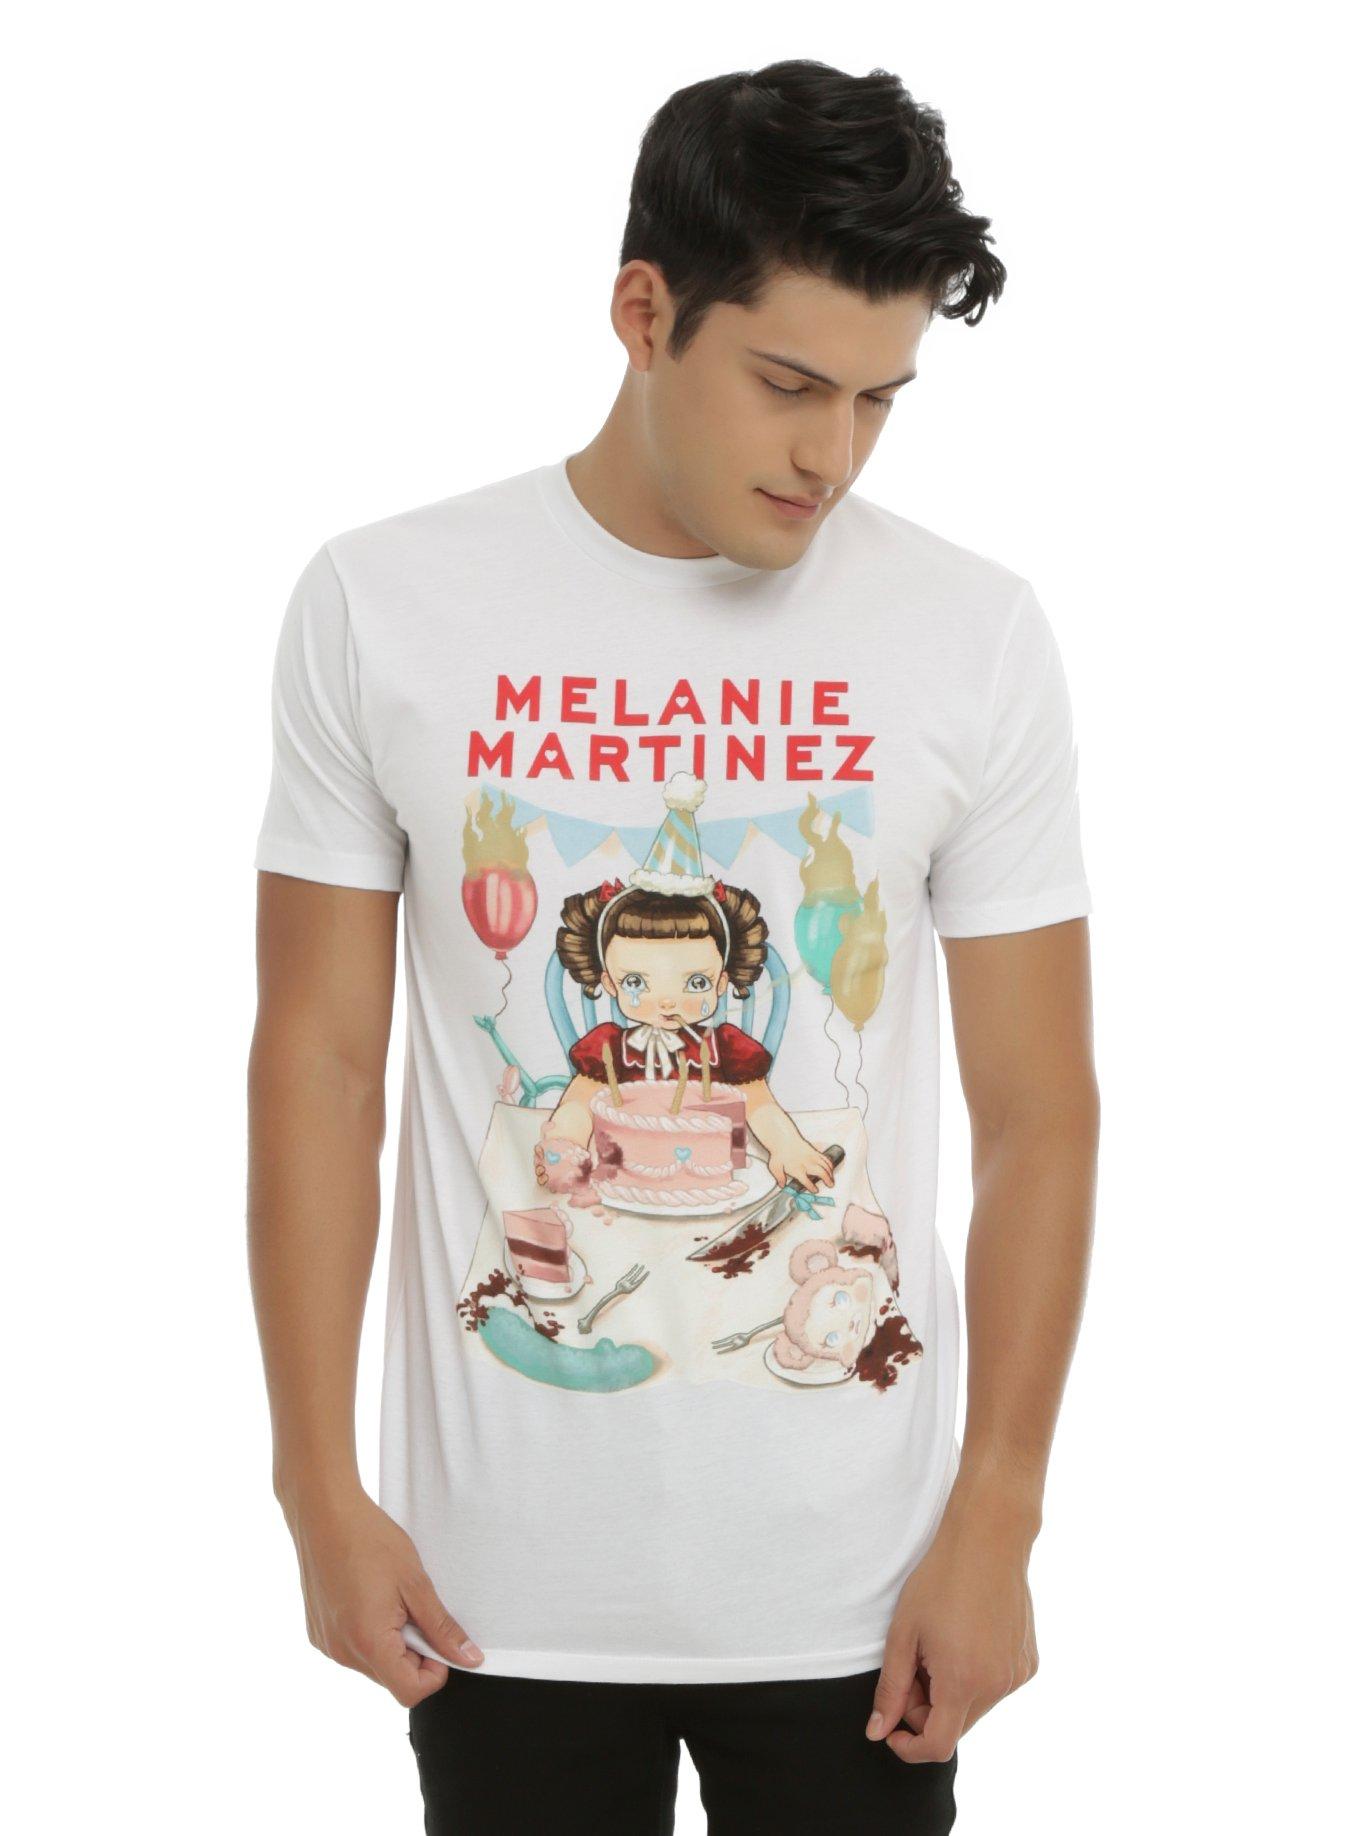 Melanie Martinez Merch Cry Baby Bottle T-Shirt  Melanie martinez merch, Melanie  martinez, Cry baby